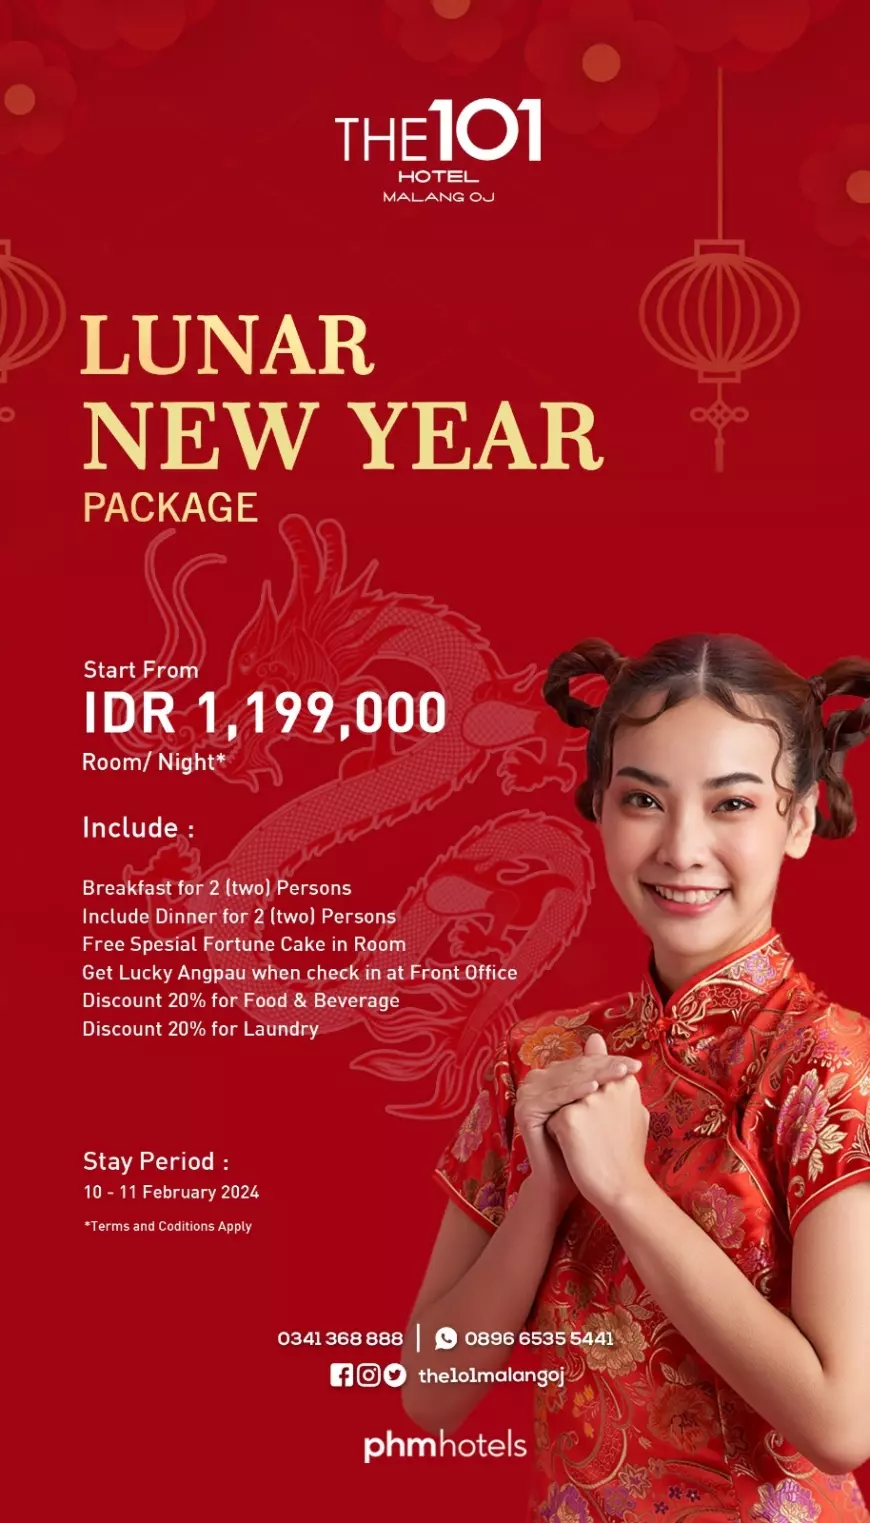 Sambut Imlek, The 101 Hotel OJ Malang Siapkan "Lunar New Year Package"